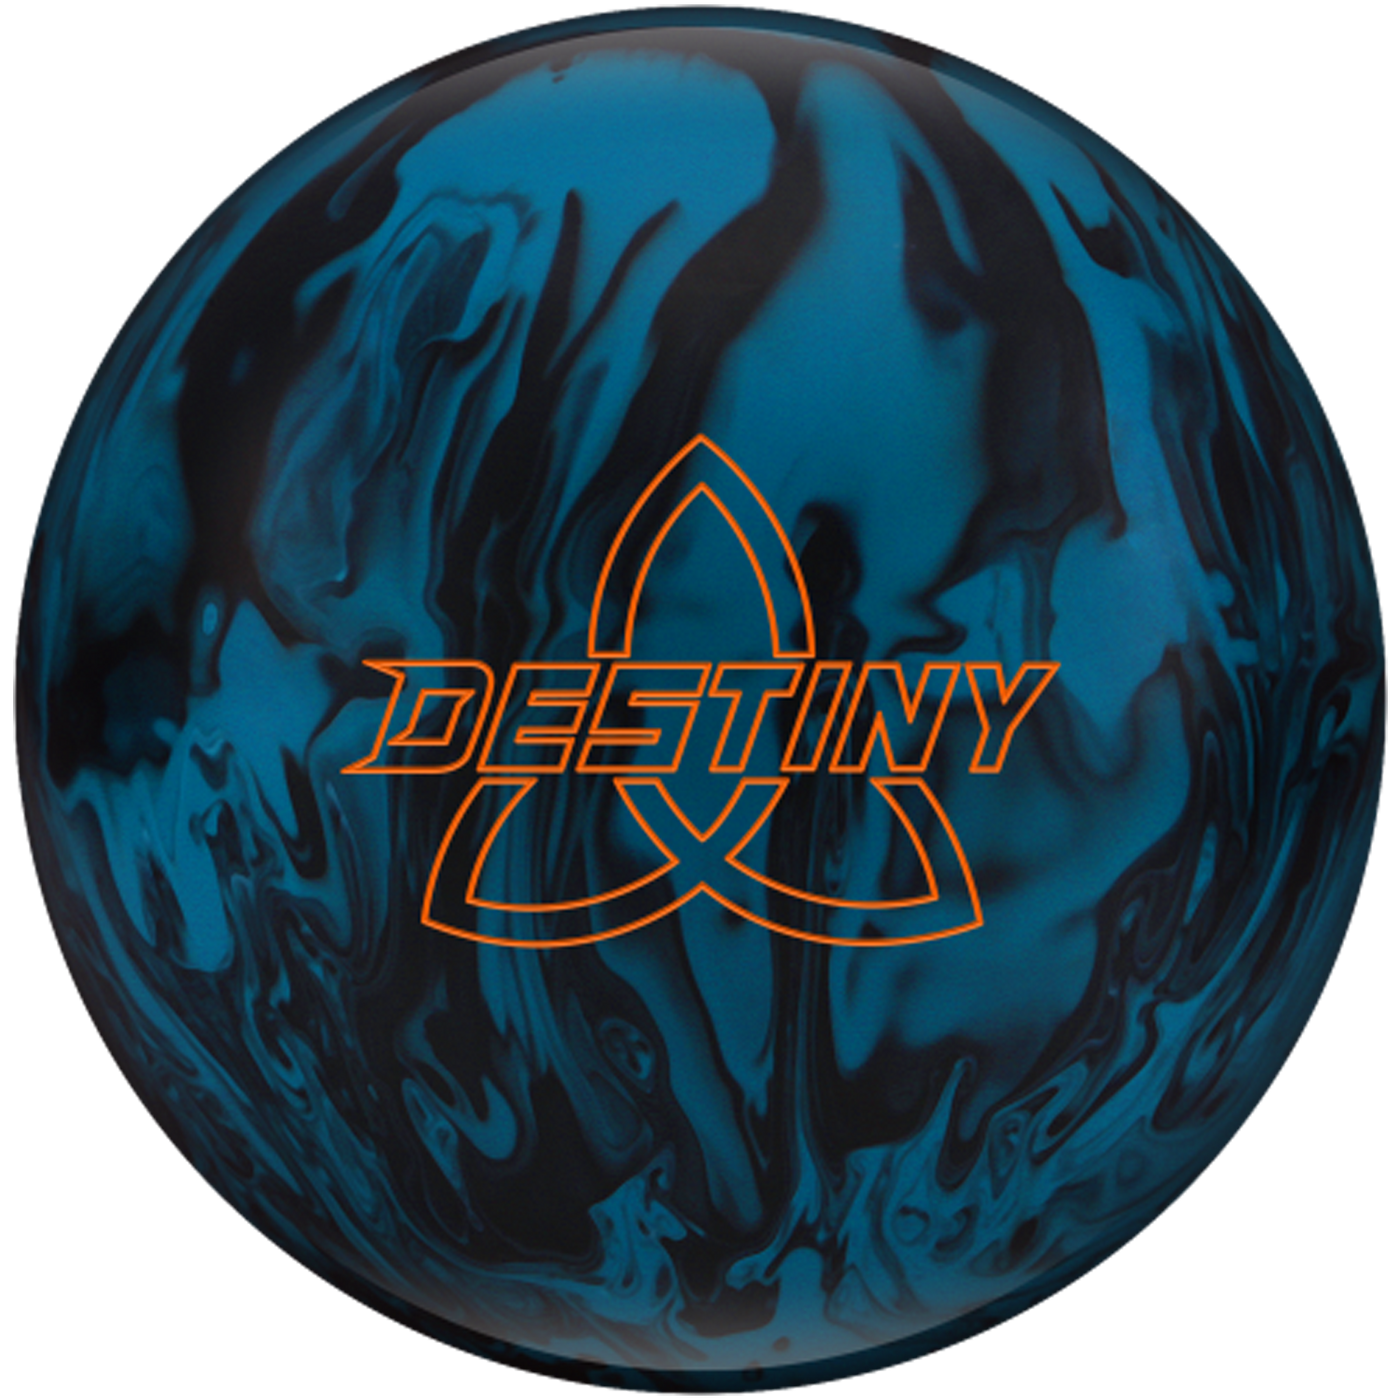 Destiny Solid Blue/Black Bowling Ball